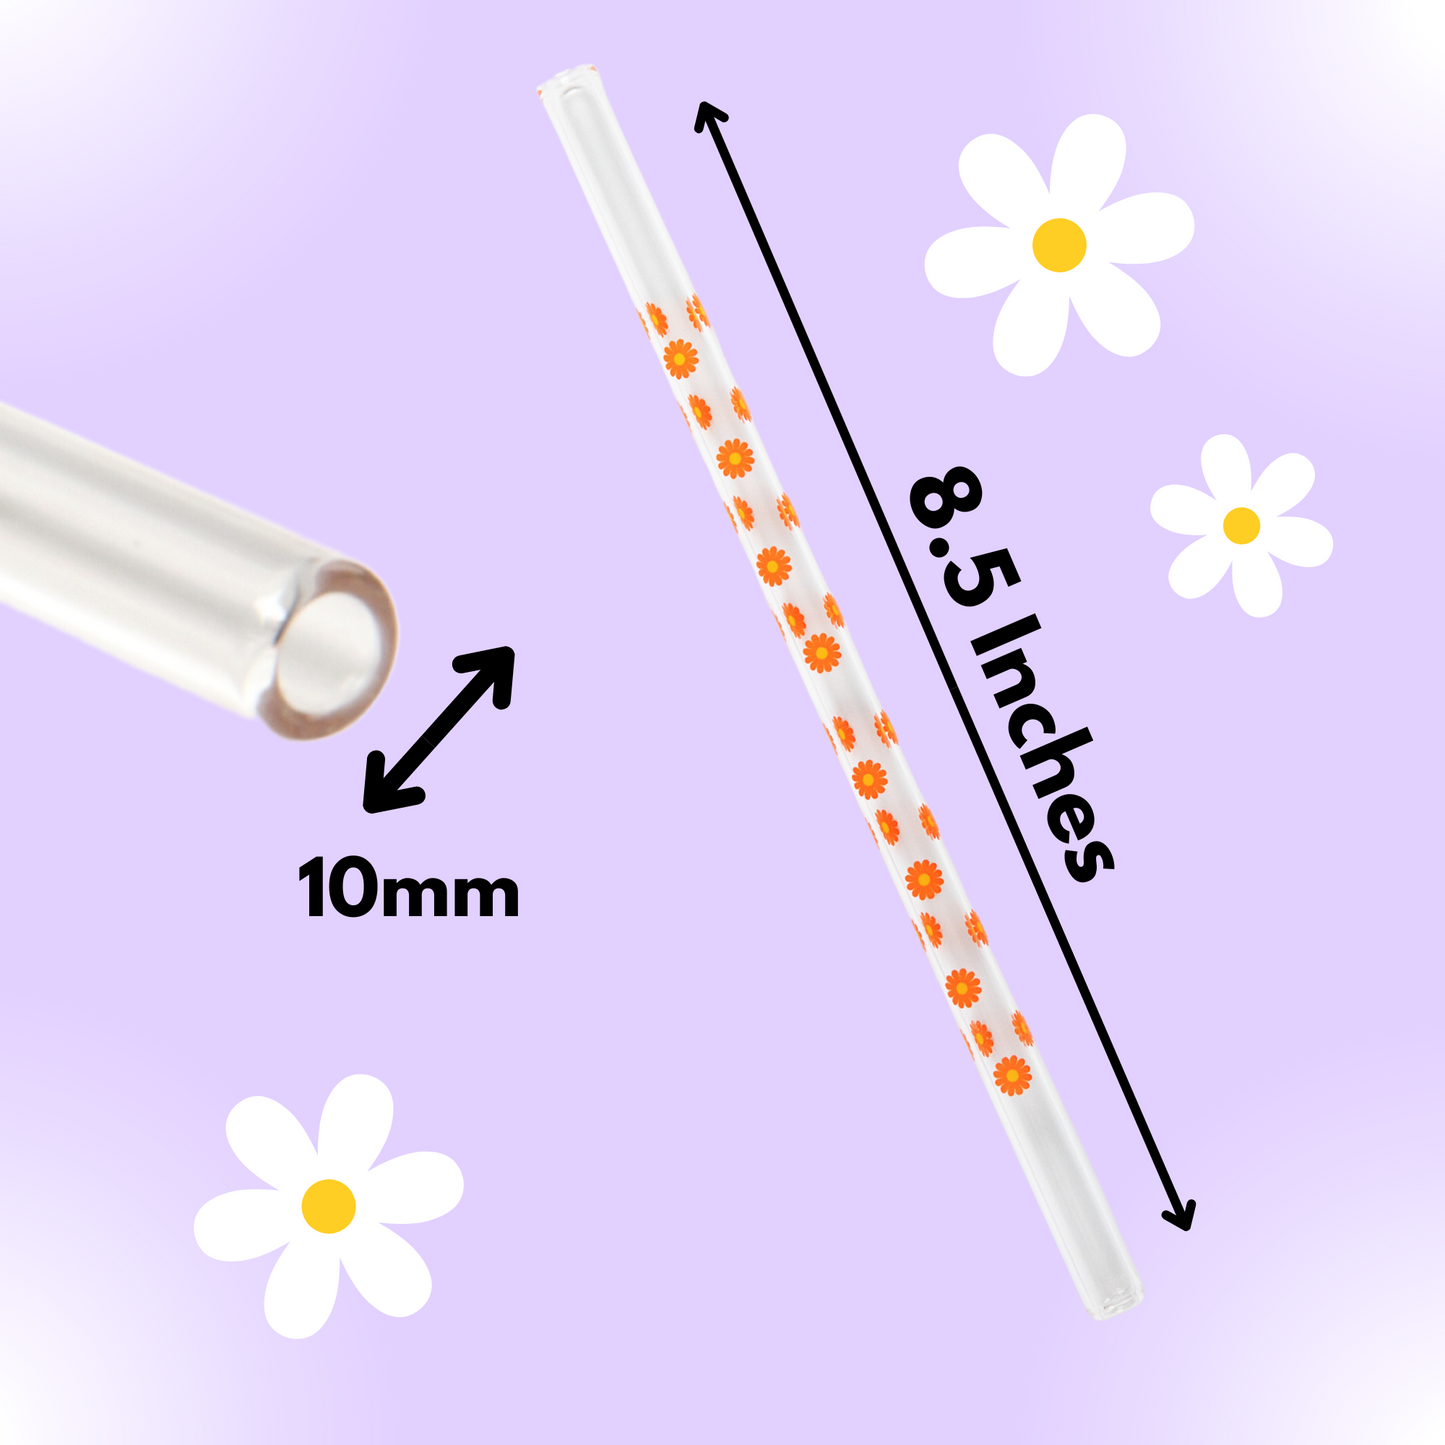 Daisy Flower Glass Straw, 6 Piece Reusable Straw Set, Glassware Accessories